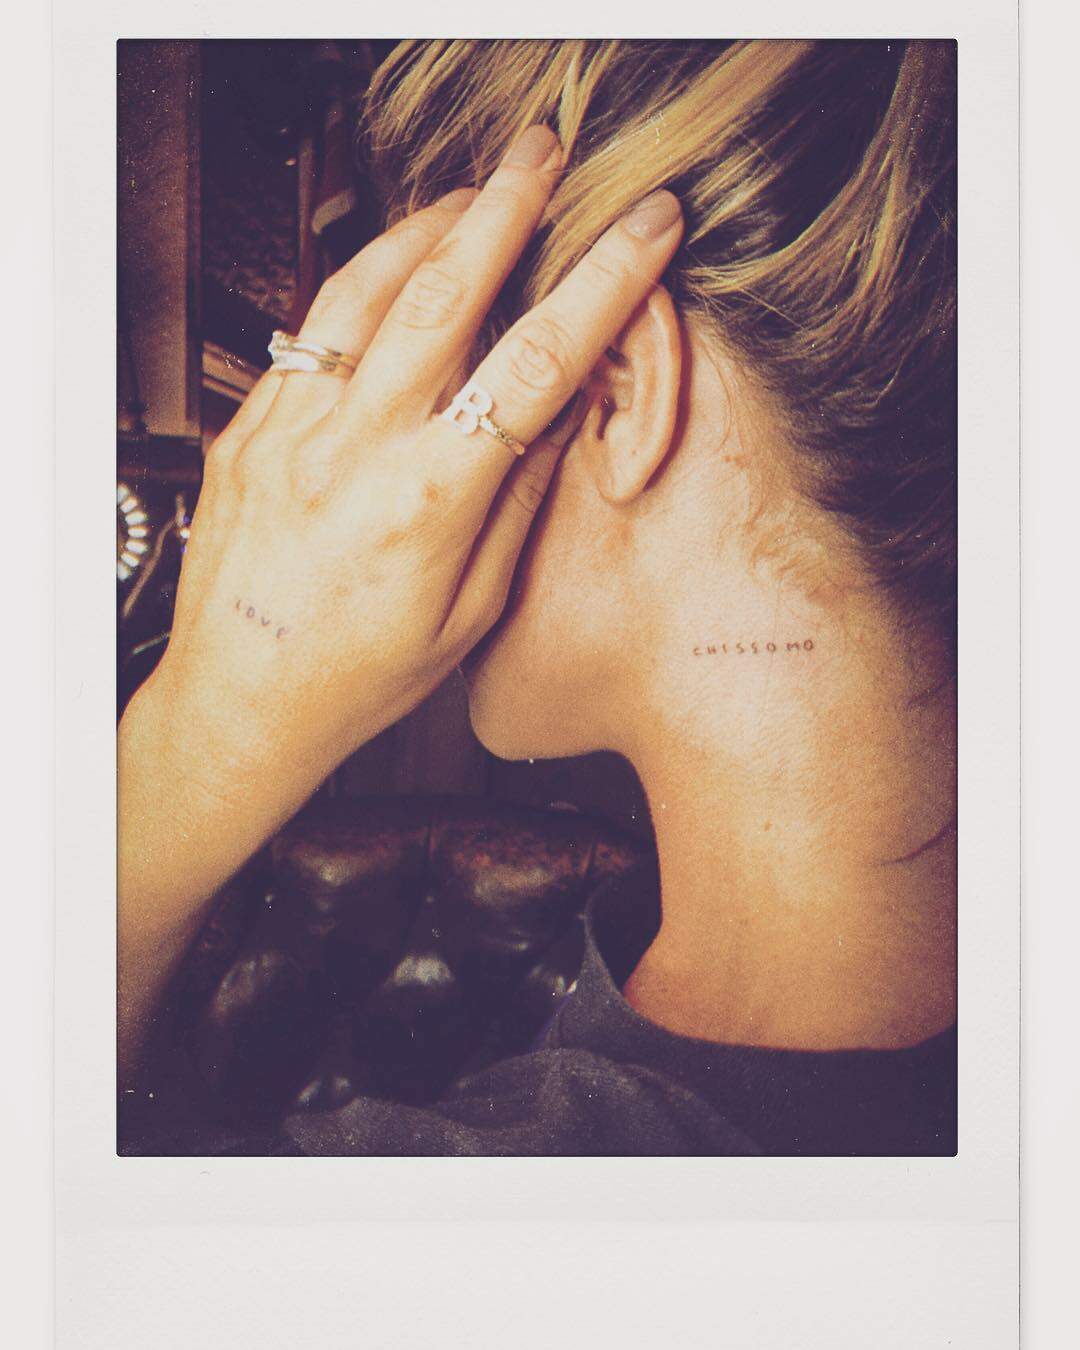 Giovanna Ewbank faz tatuagem fofíssima em homenagem á Titi